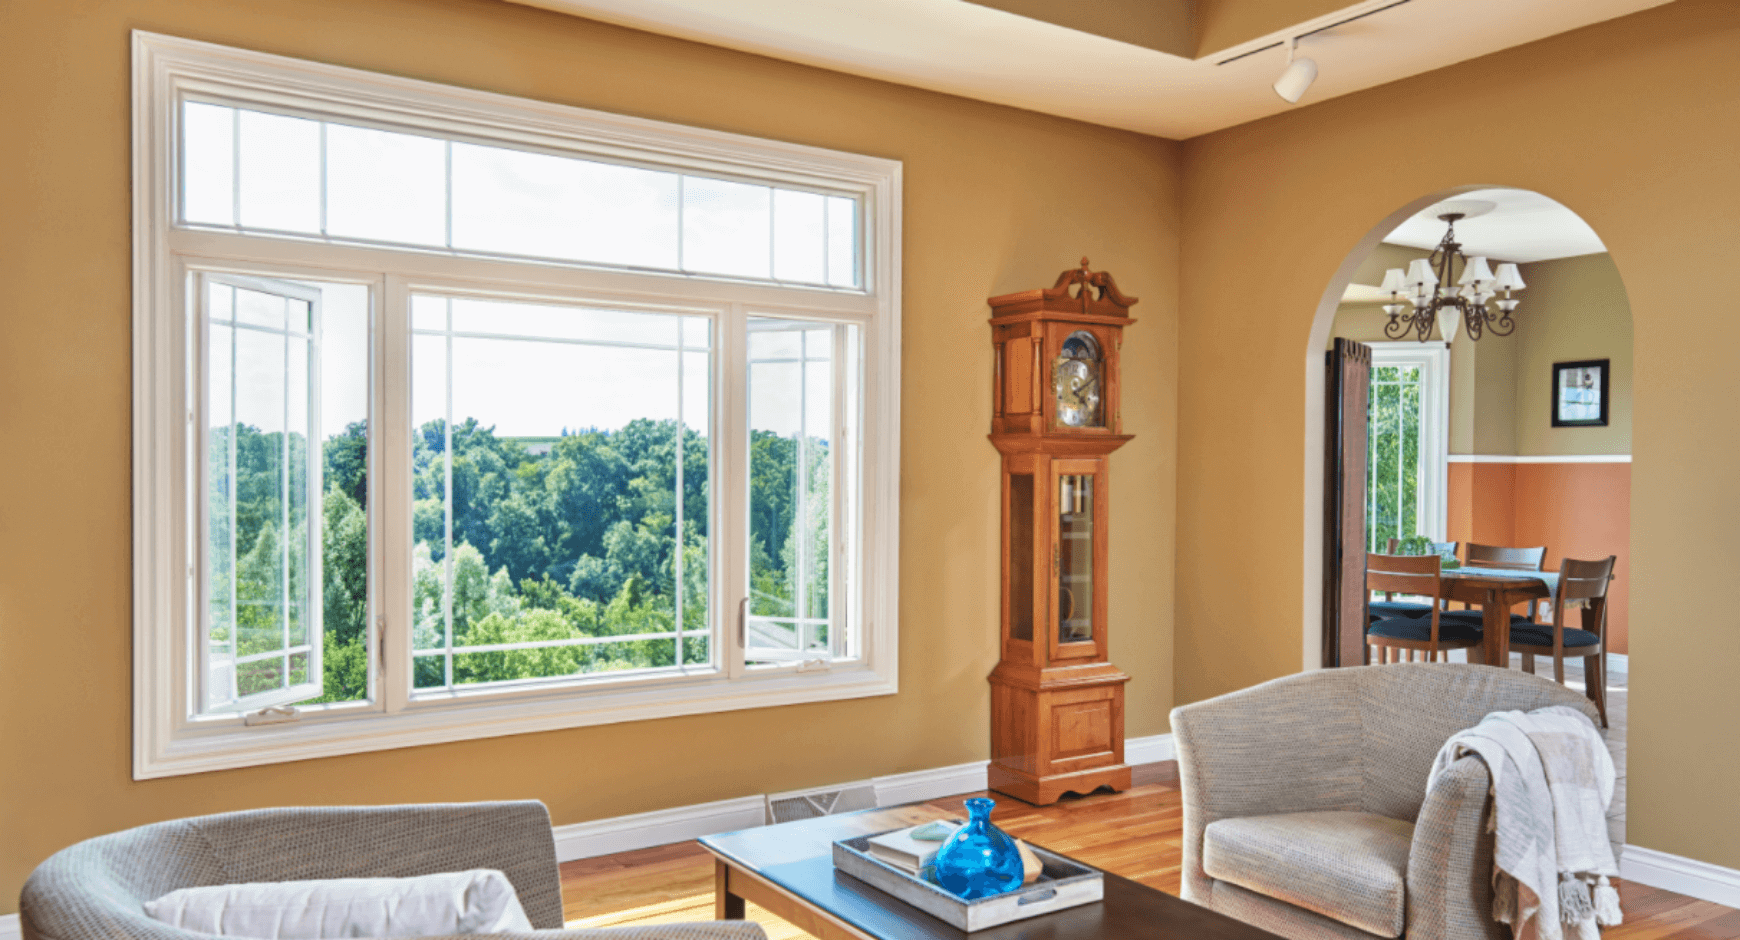 Fibrex window in a living room